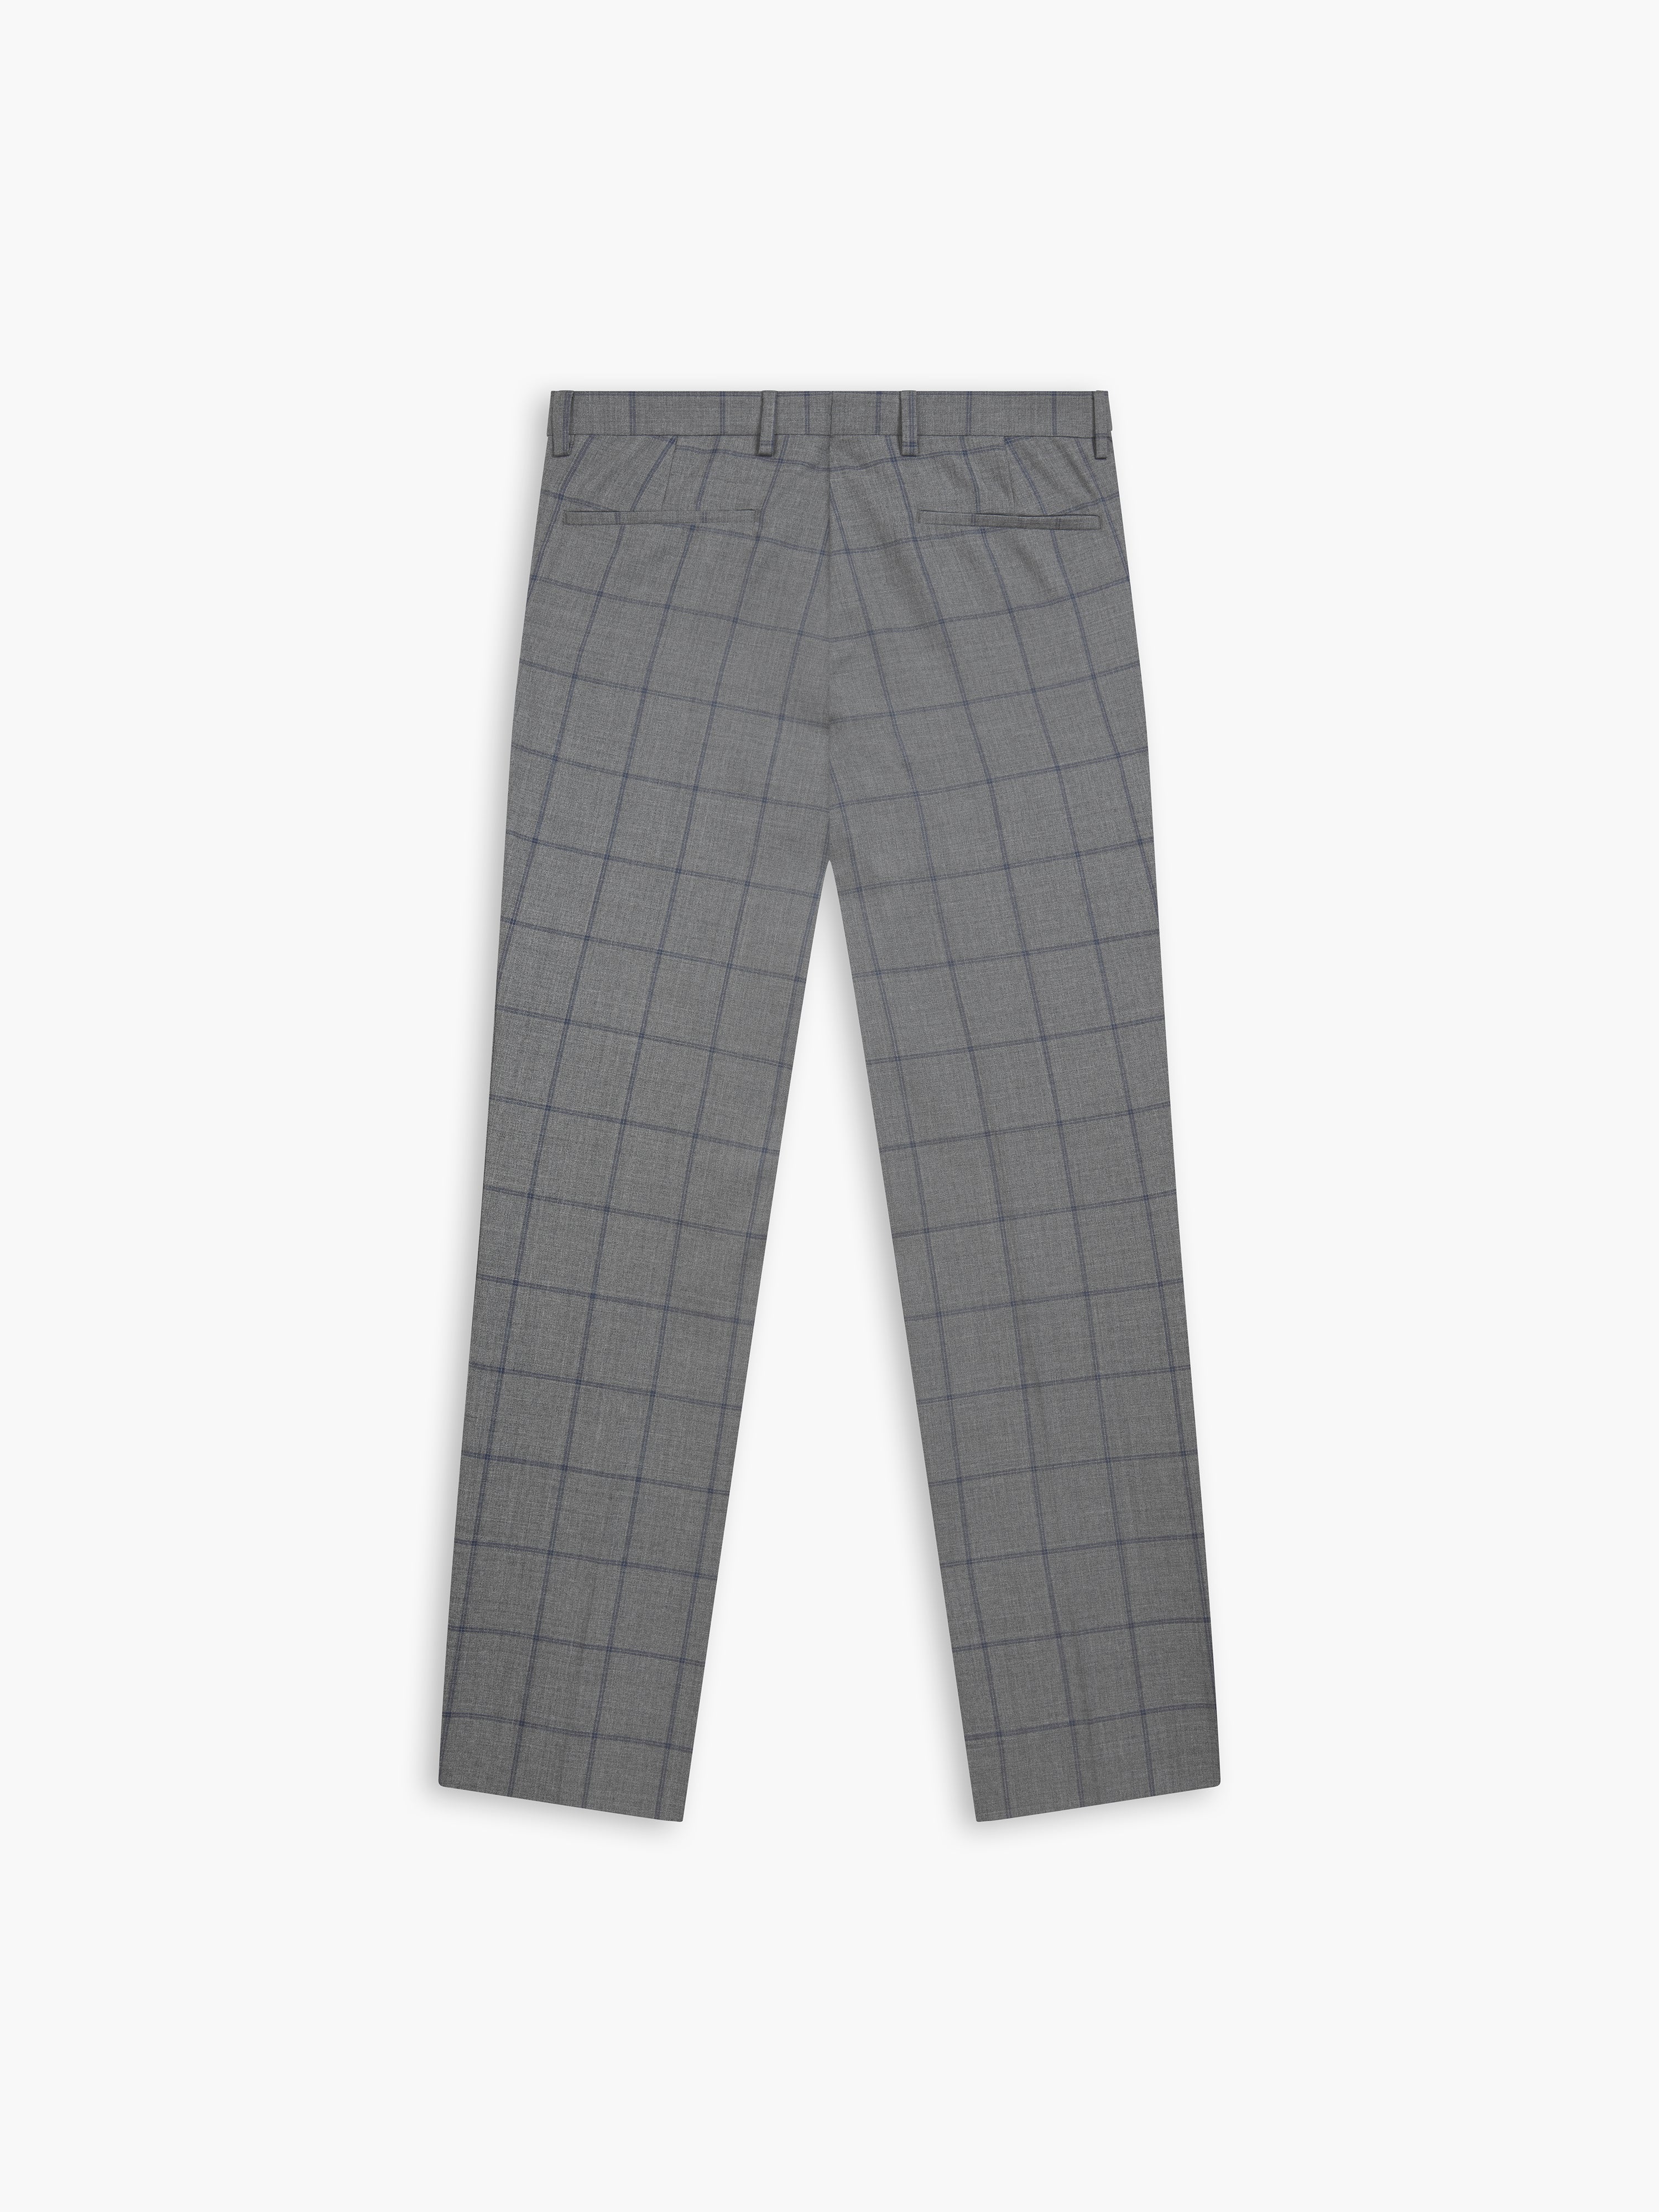 Buy Beige Trousers & Pants for Men by BREAKPOINT Online | Ajio.com